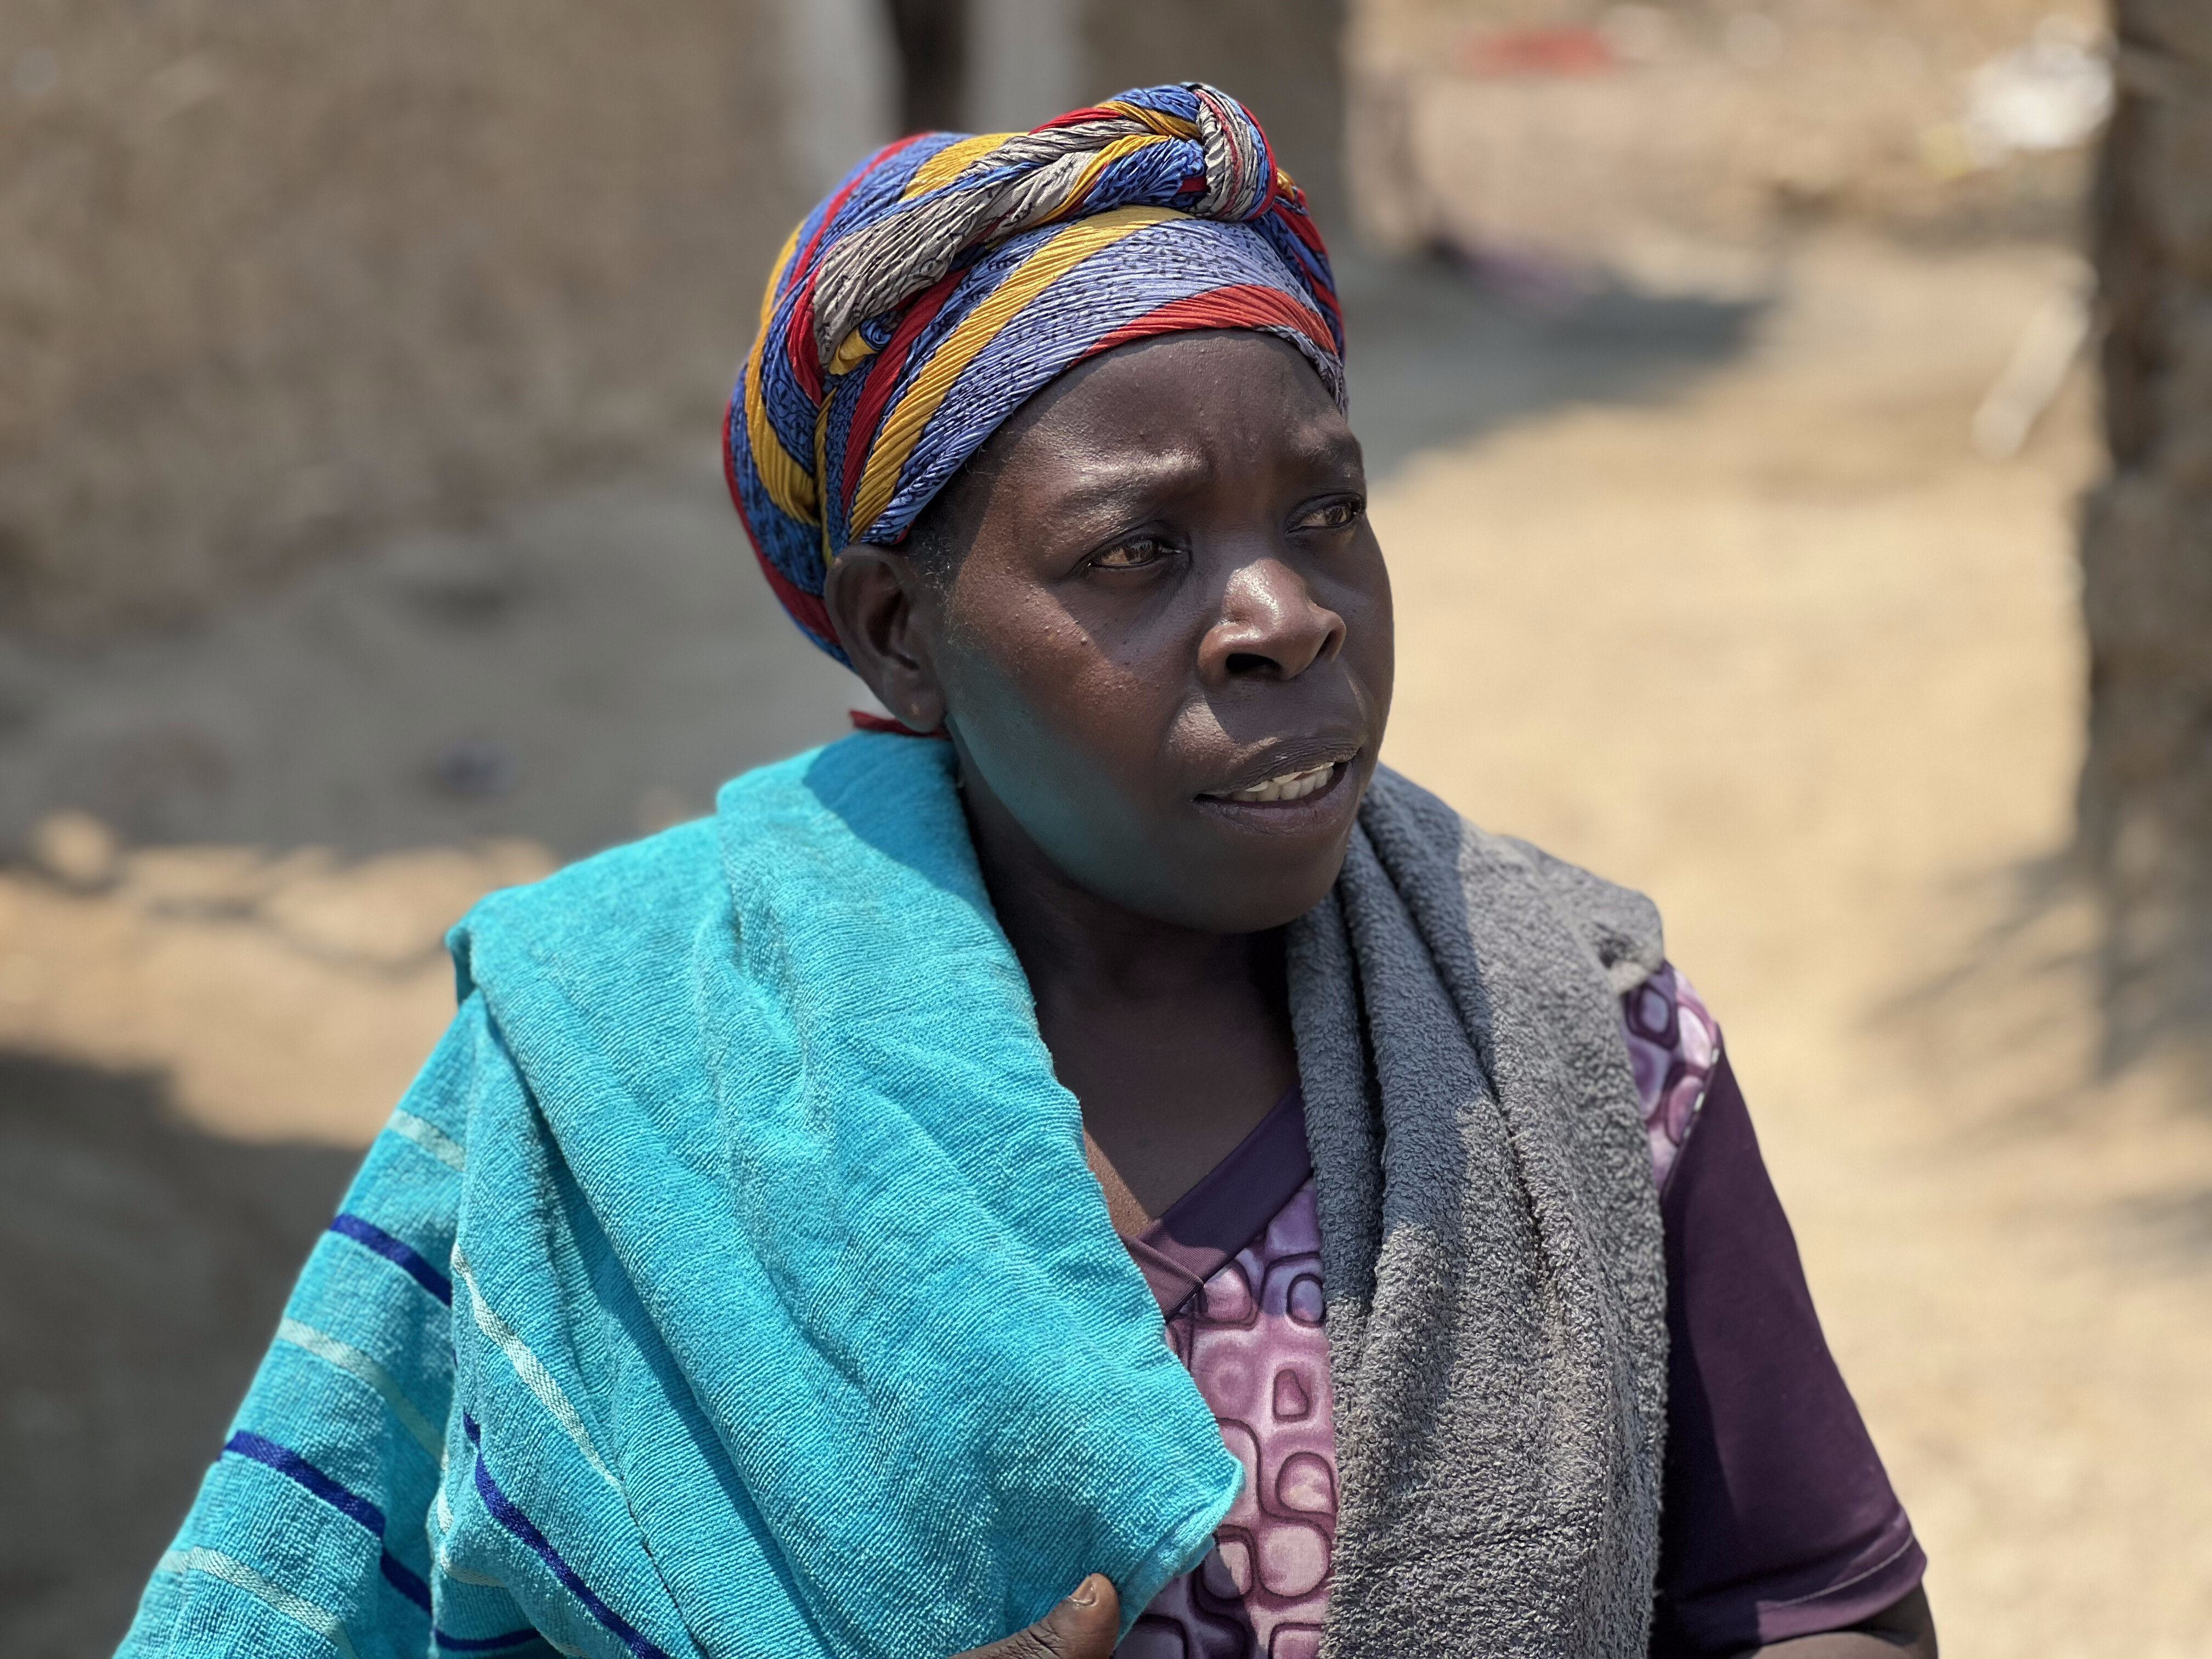 Nyiranshuti Atanaziya speaks with MCC staff at Zambia's Meheba Refugee Settlement Camp.